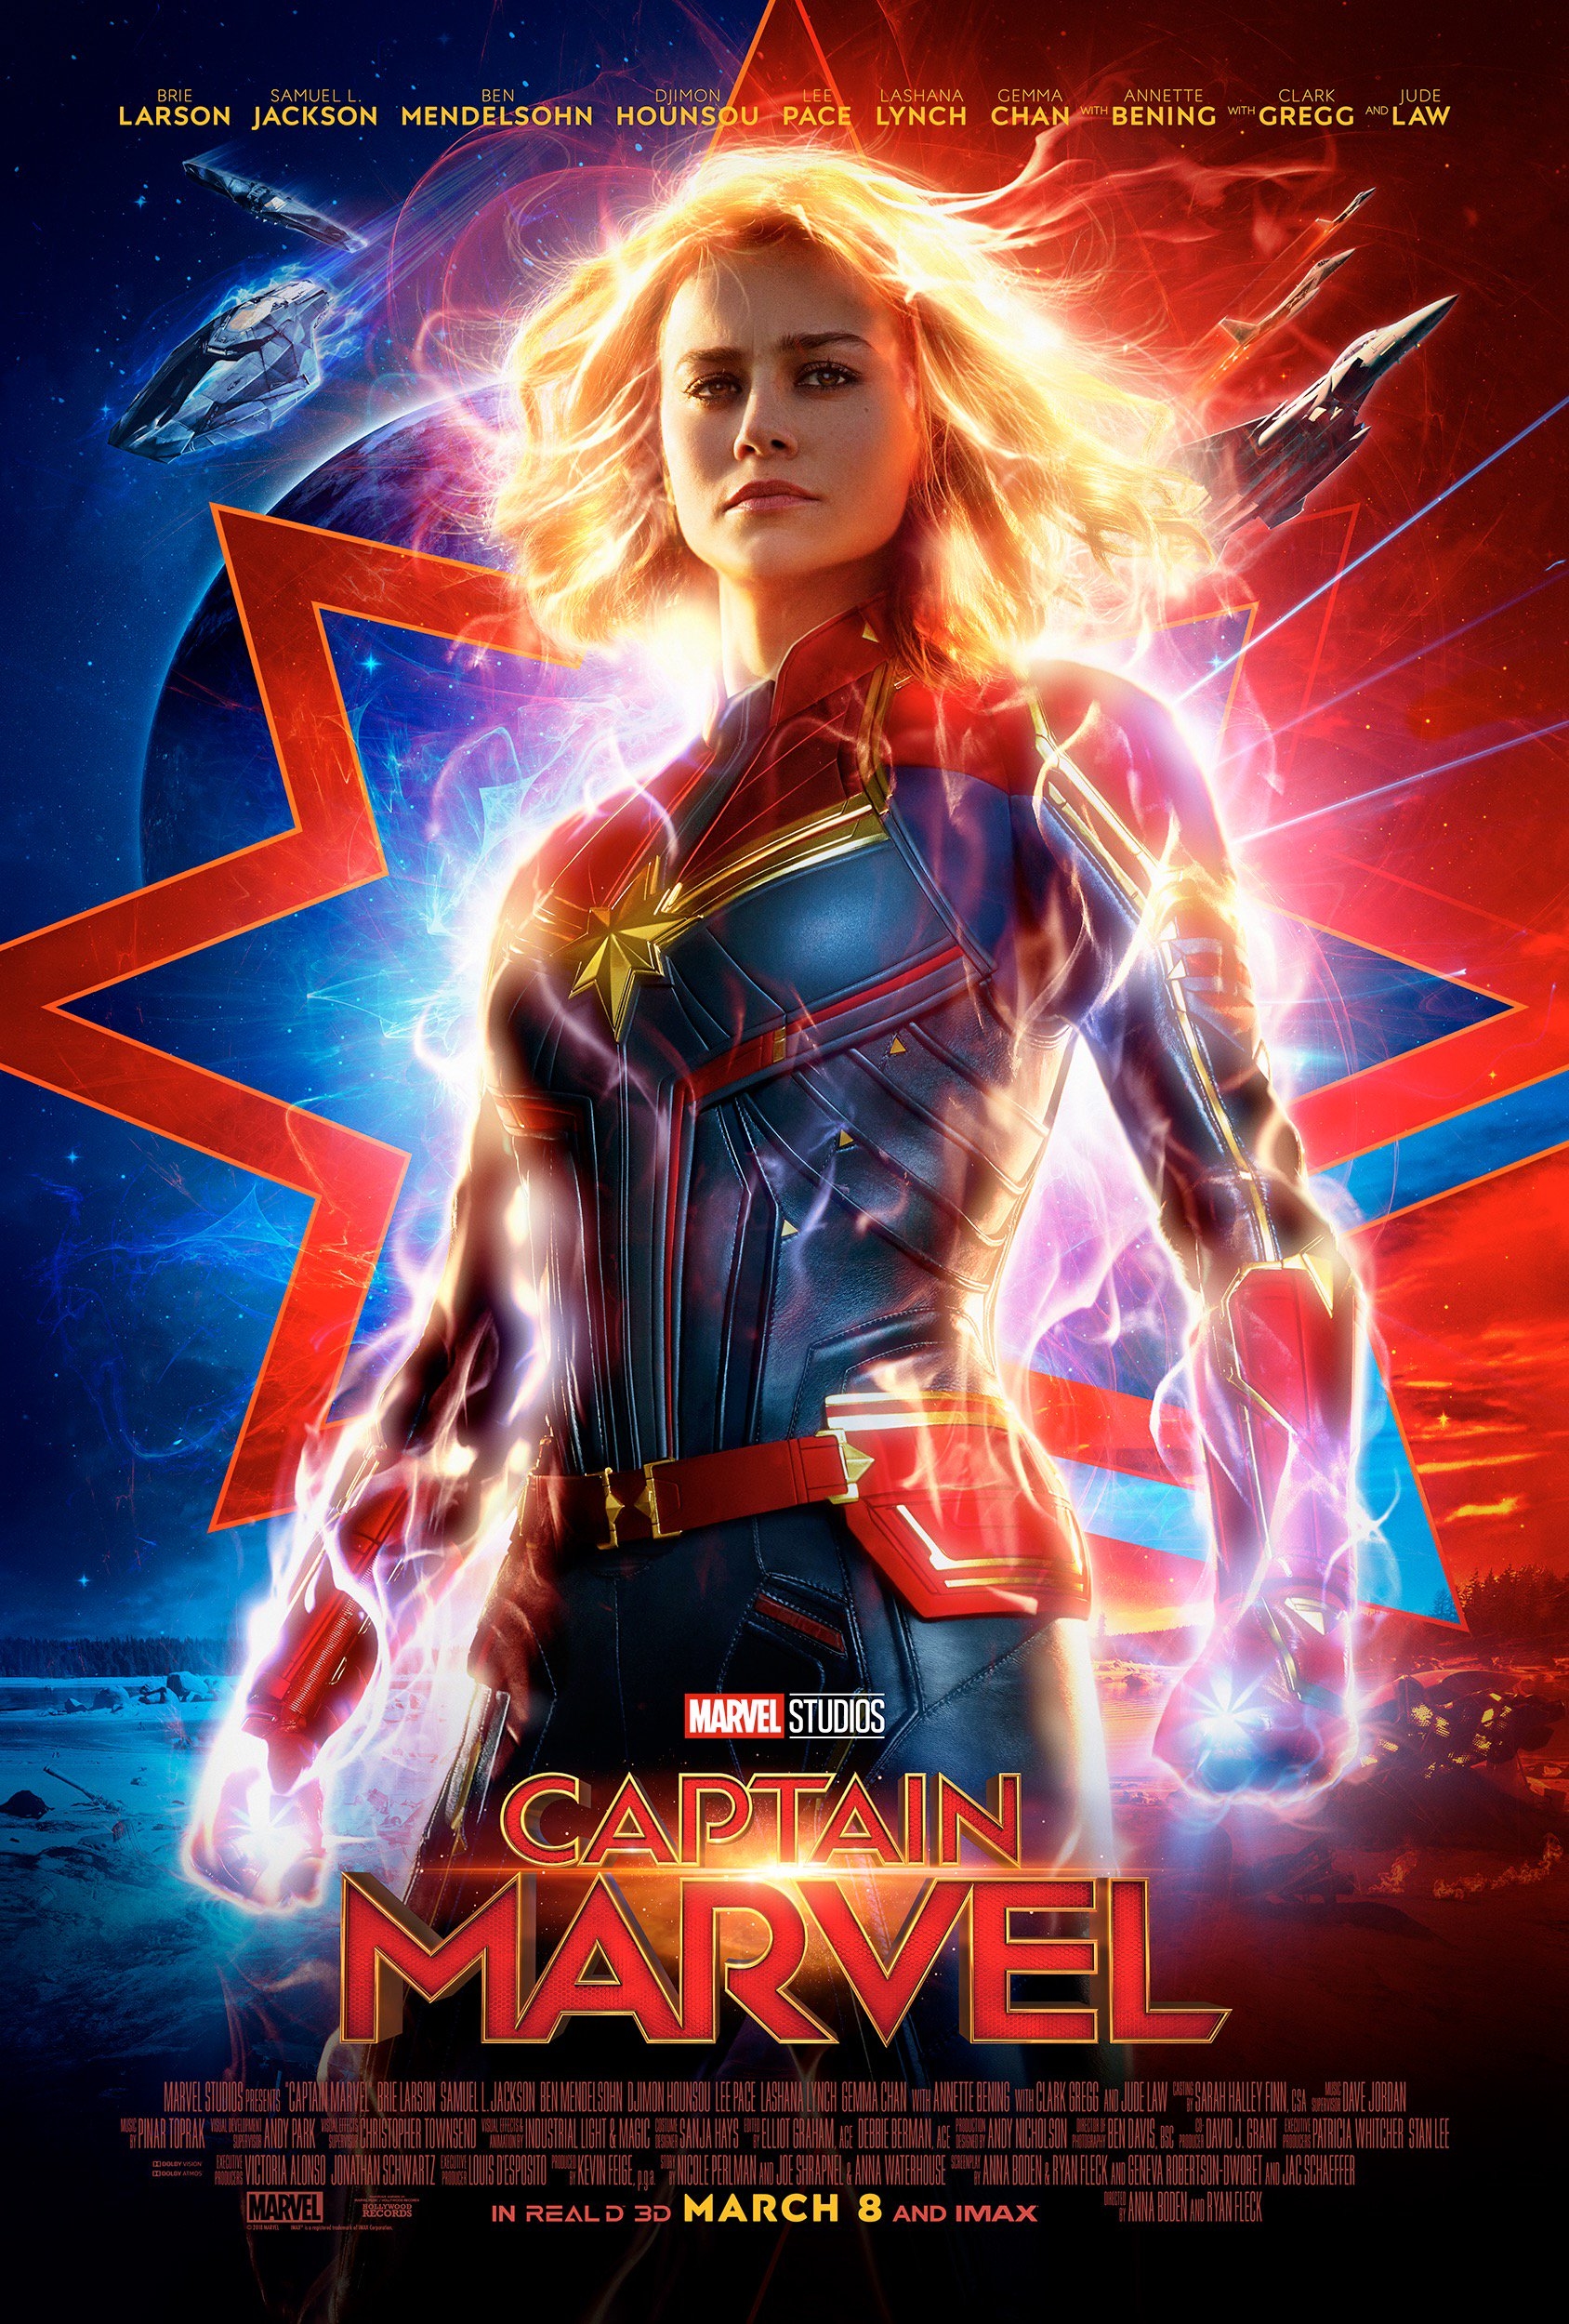 Stiahni si Filmy Kamera Captain Marvel (2019)[HDTC][1080p] = CSFD 74%